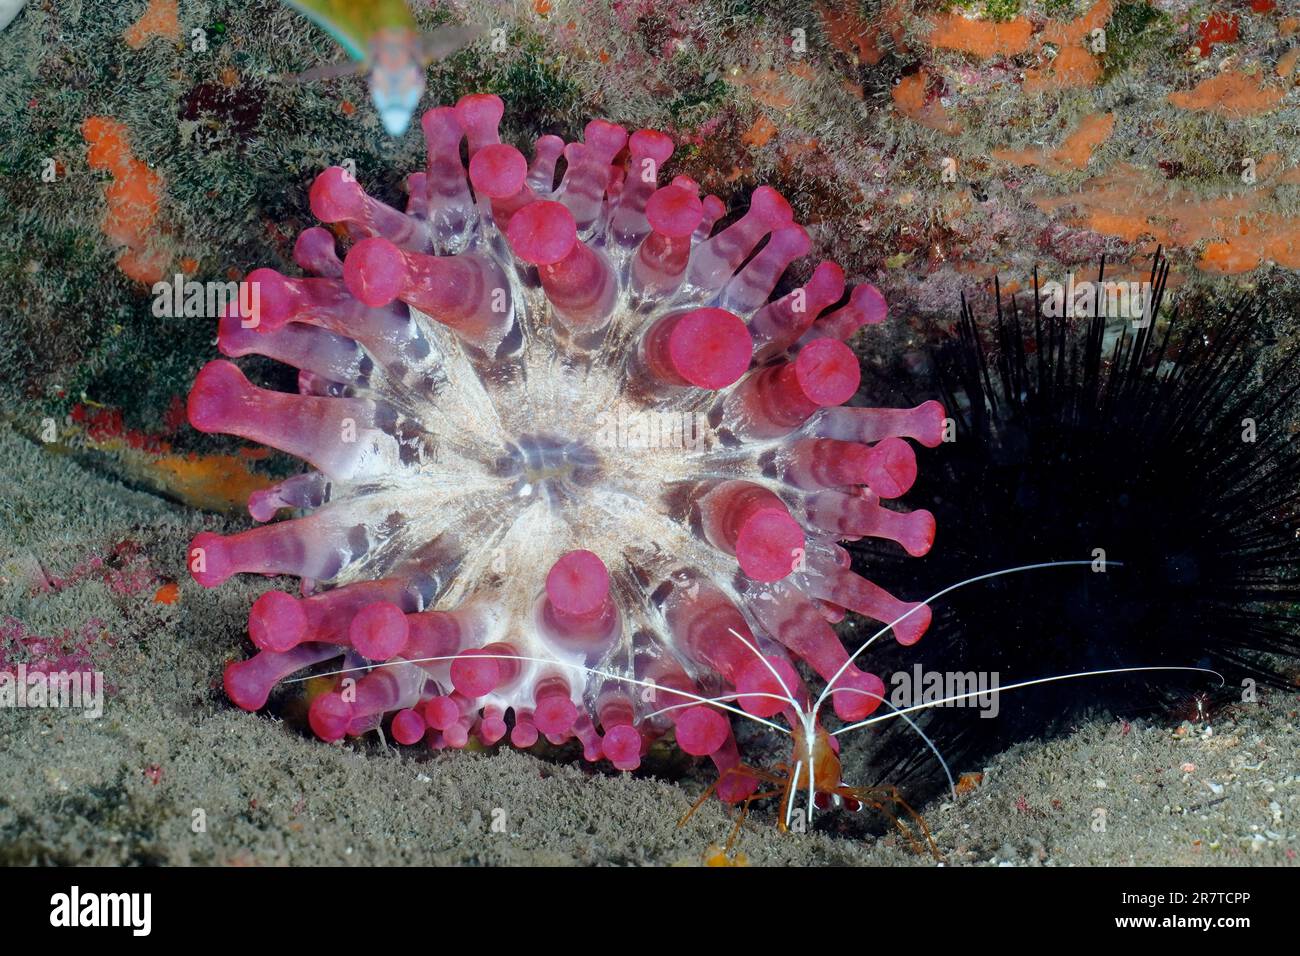 Pink club-tipped anemone (Telmatactis cricoides) with Atlantic pacific cleaner shrimp (Lysmata grabhami), El Cabron marine reserve dive site, Tufia Stock Photo